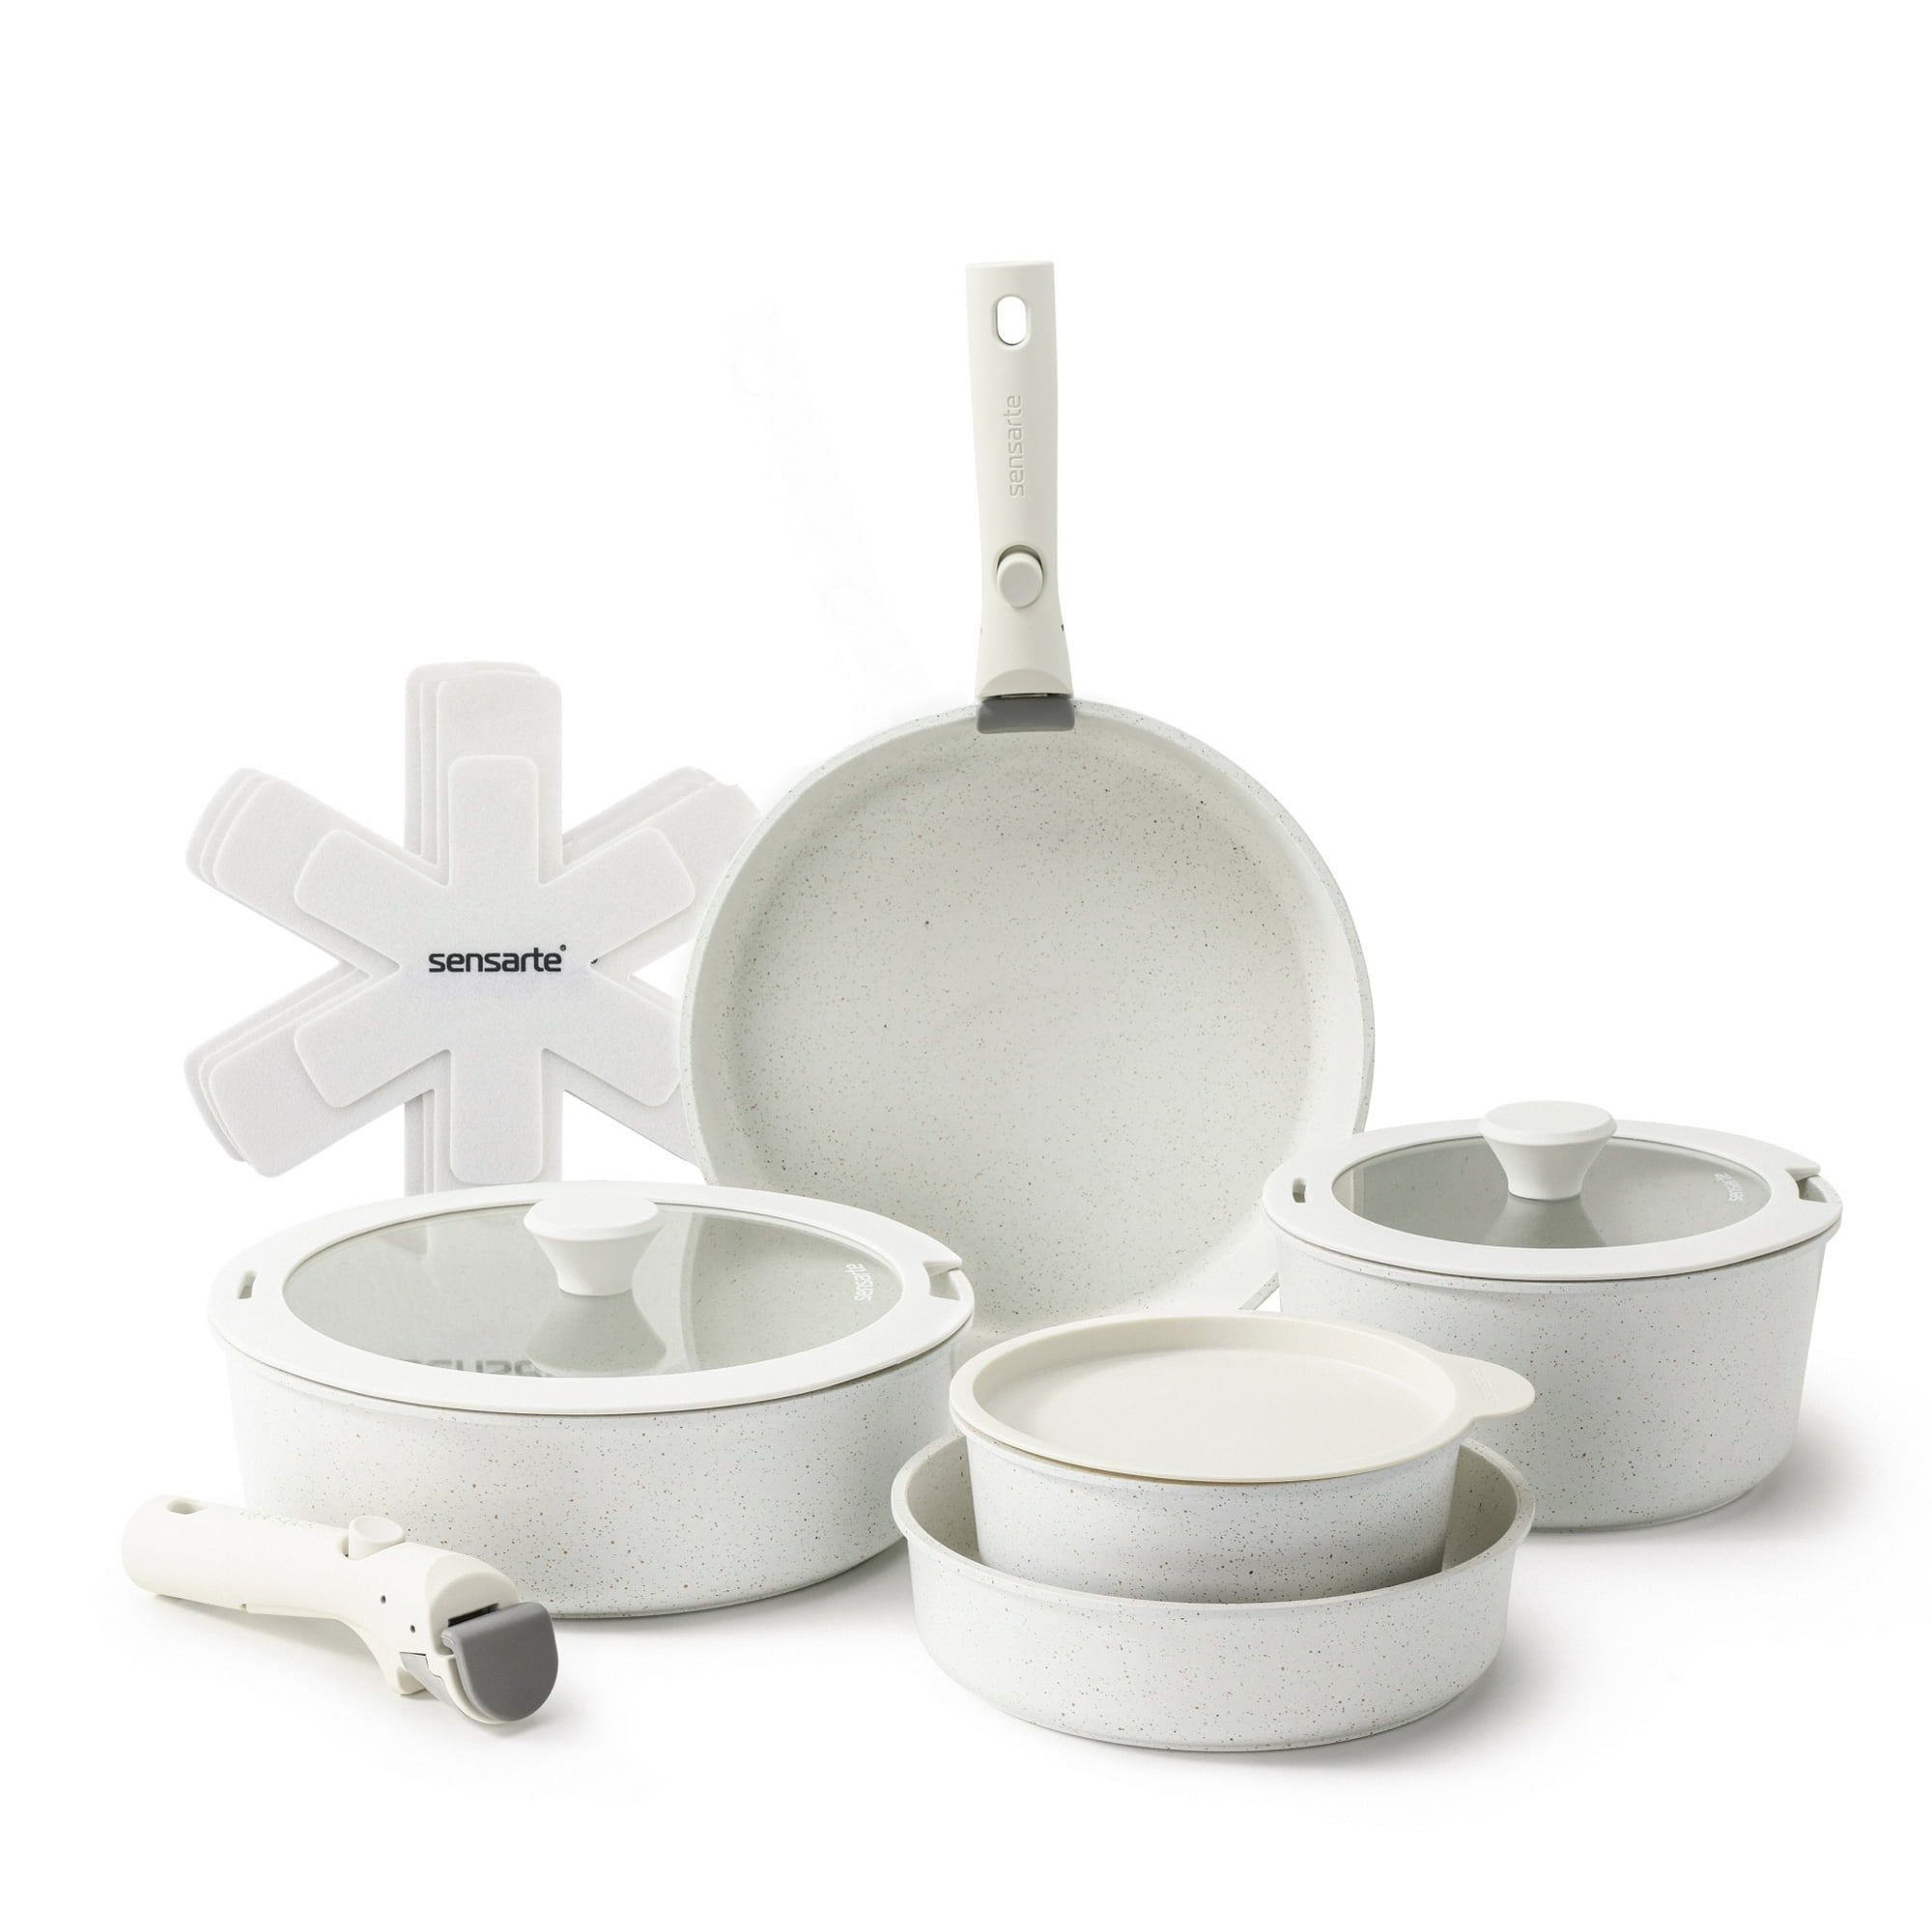 SENSARTE Pots and Pans Set Nonstick with Detachable Handles, 14pcs Induction Cookware Set Stackable, Space Saving Kitchen Cookware Sets Non-Stick with